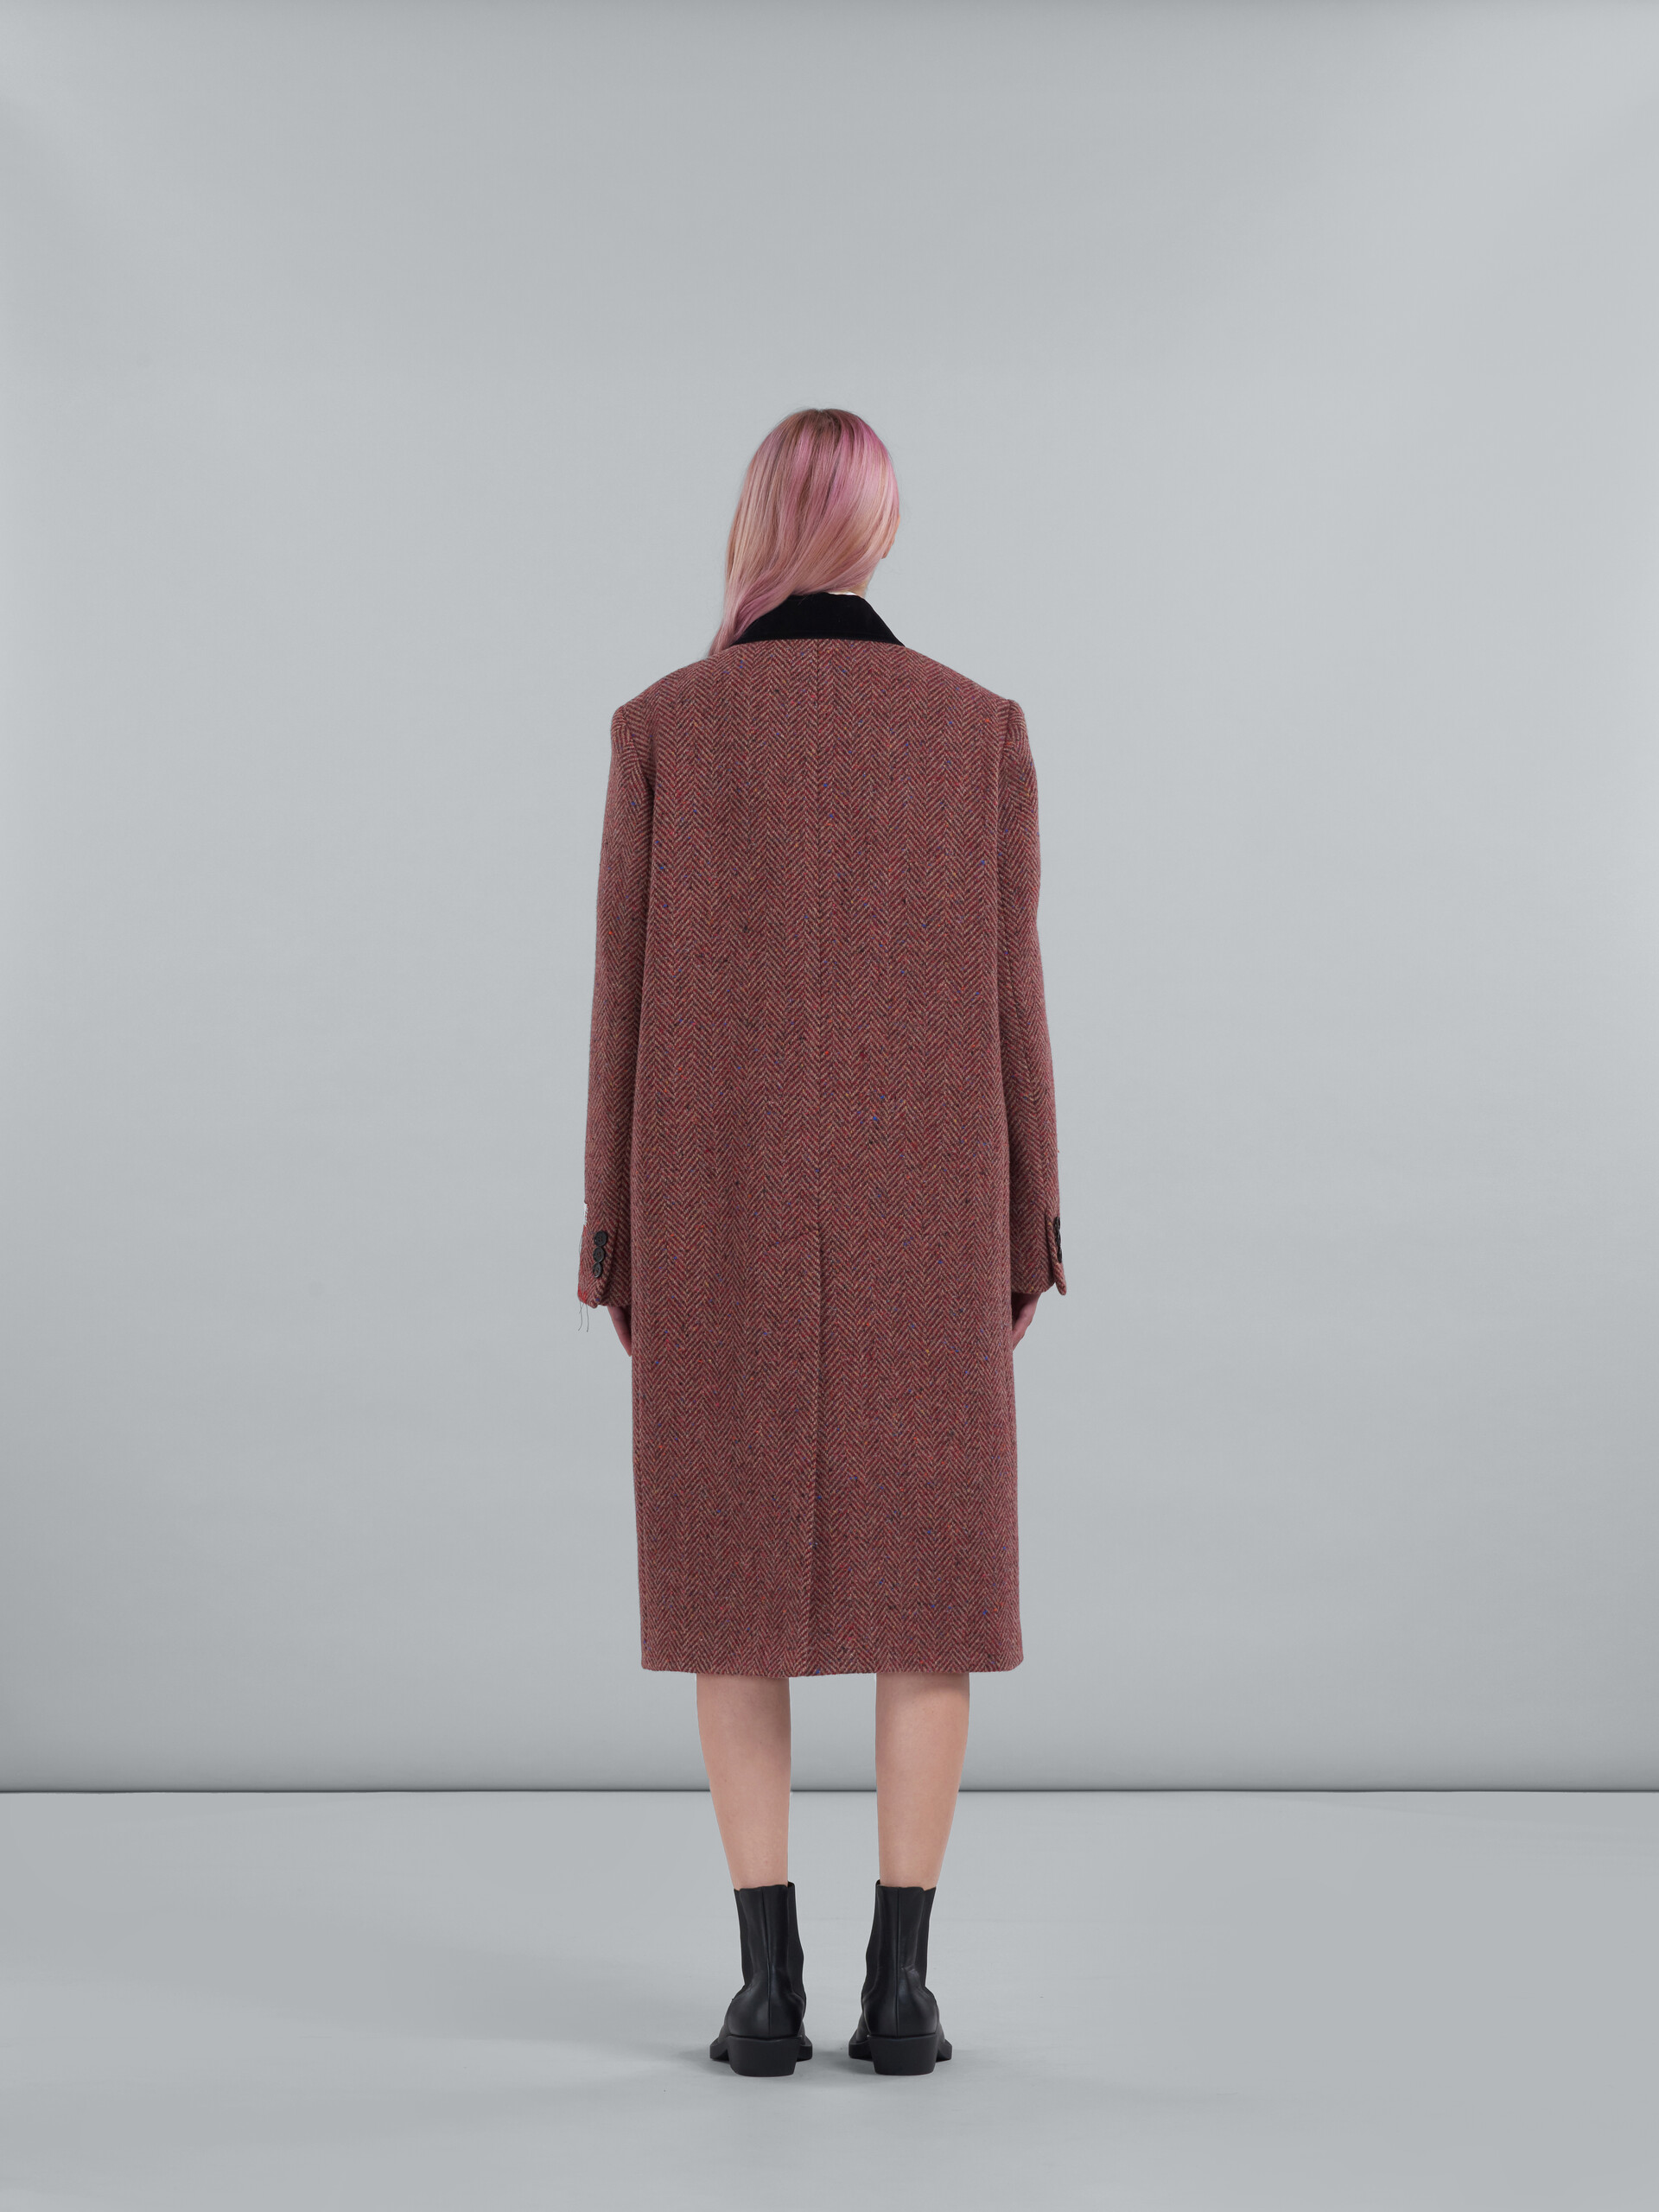 Burgundy chevron wool coat with velvet collar - Coat - Image 3